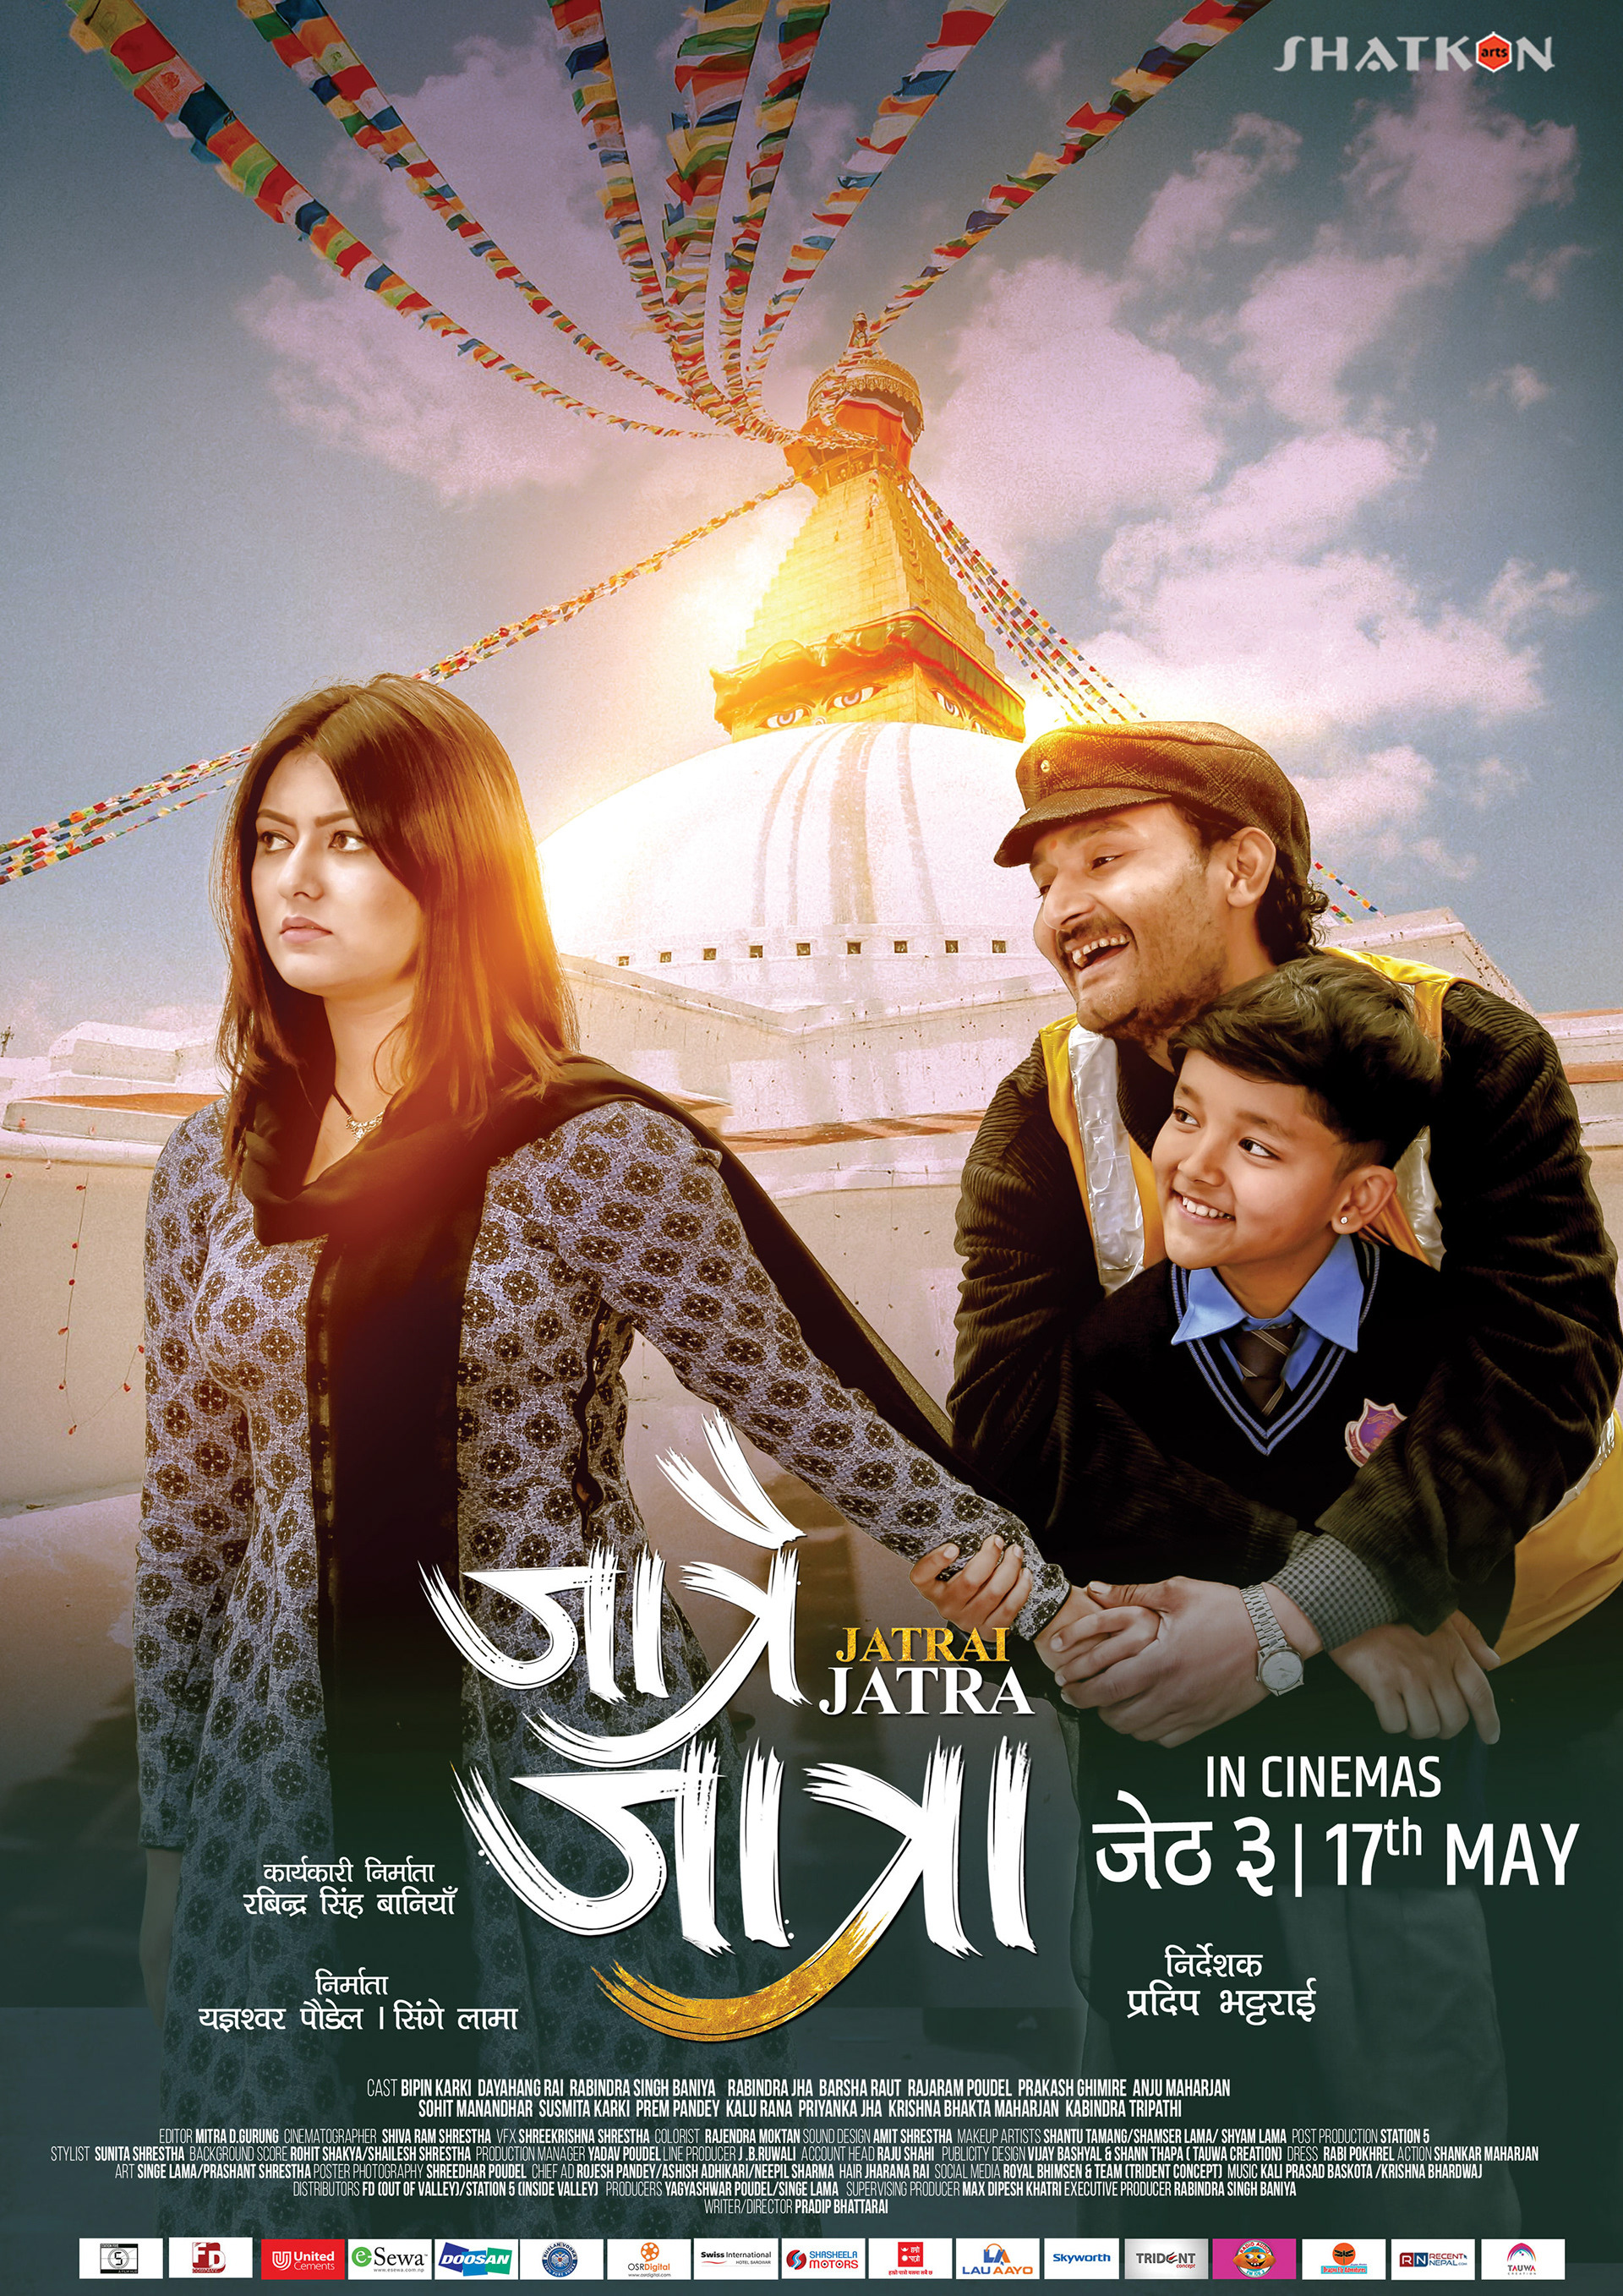 Mega Sized Movie Poster Image for Jatrai Jatra (#2 of 4)